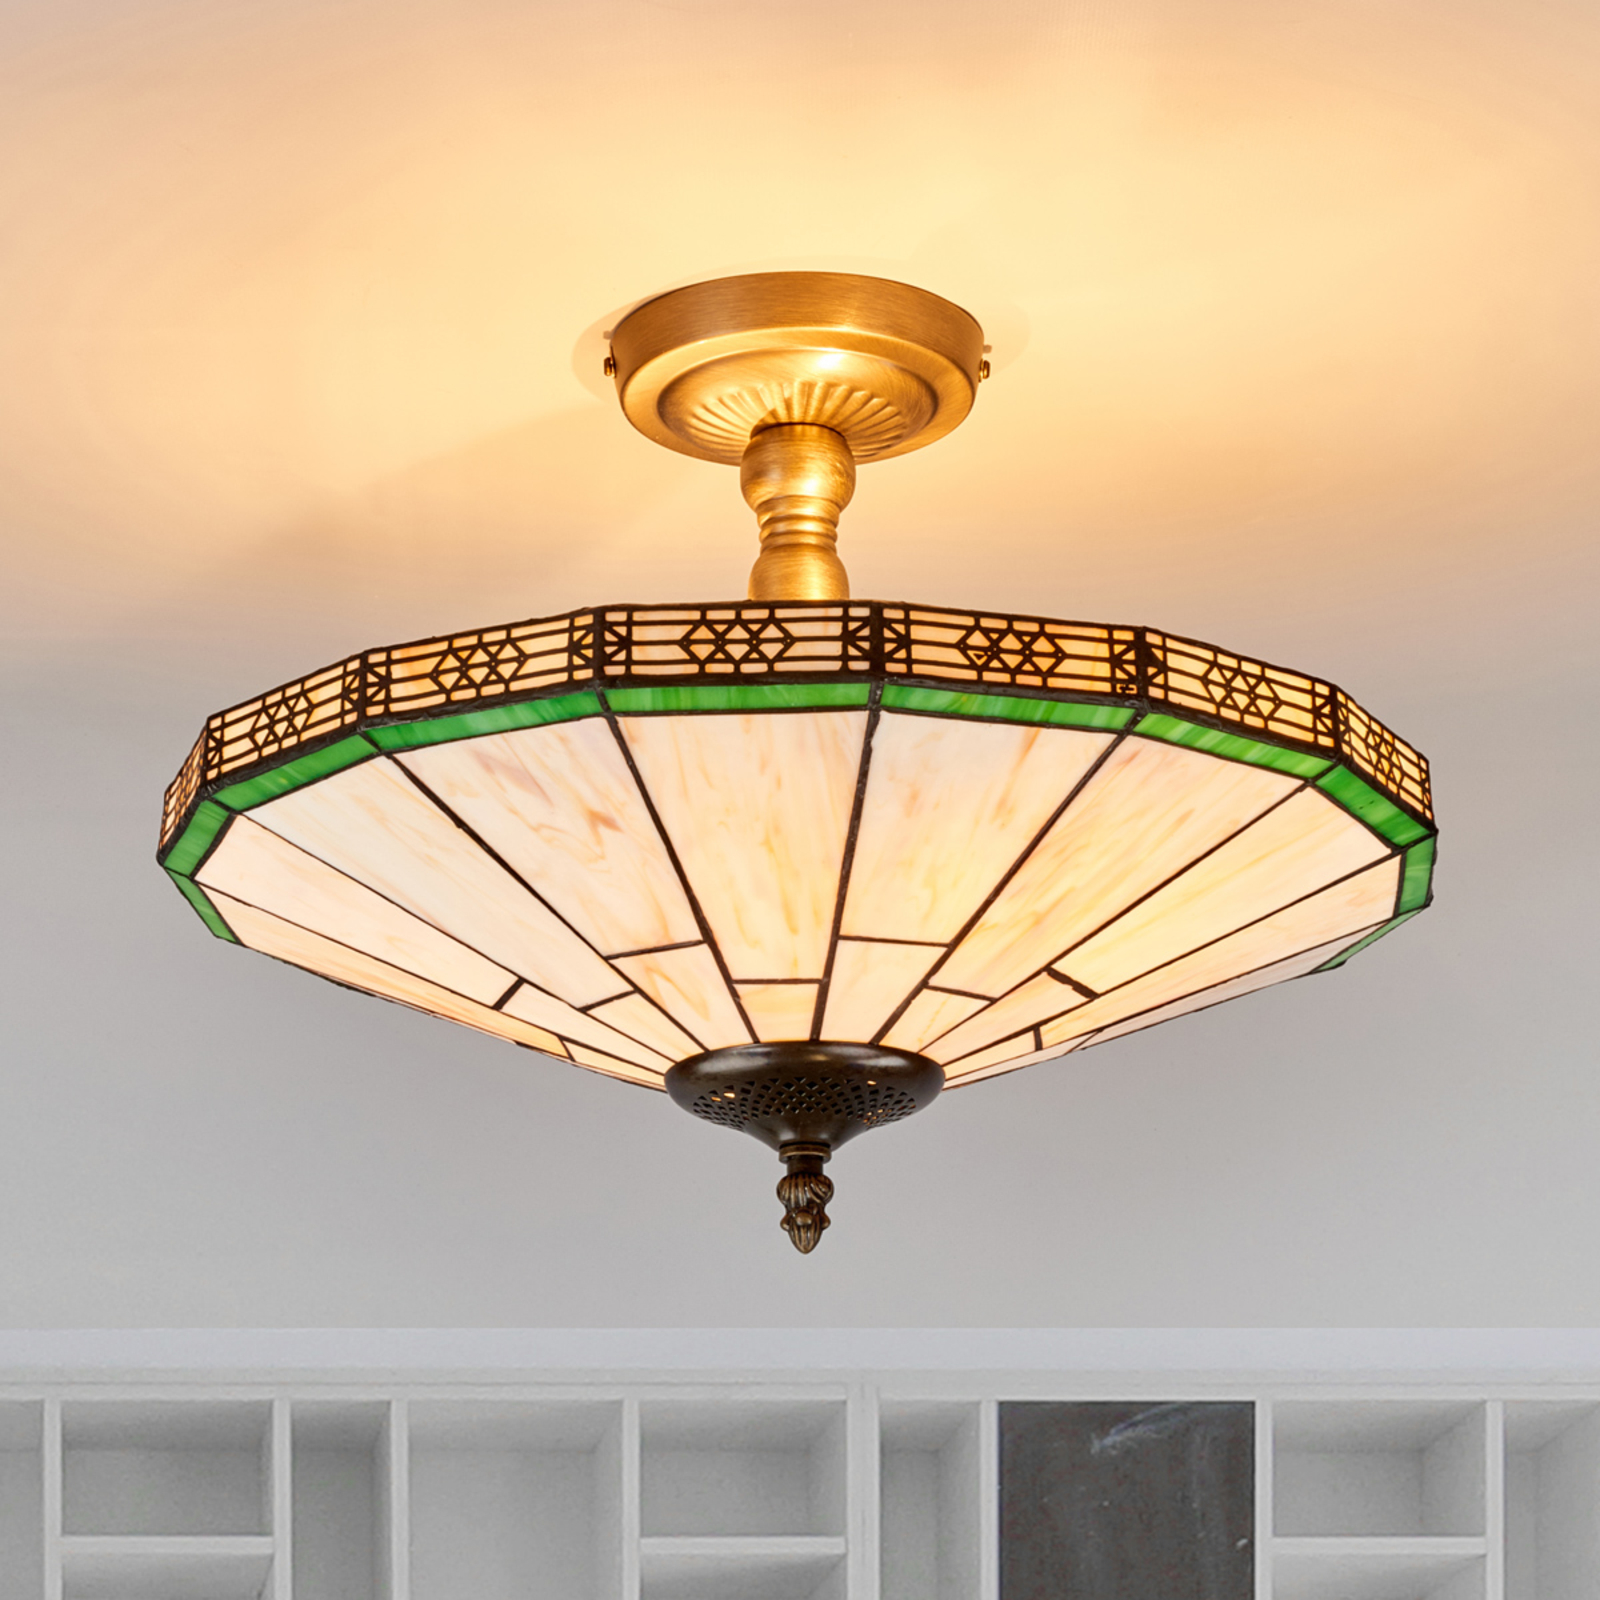 Tiffany-style New York ceiling light